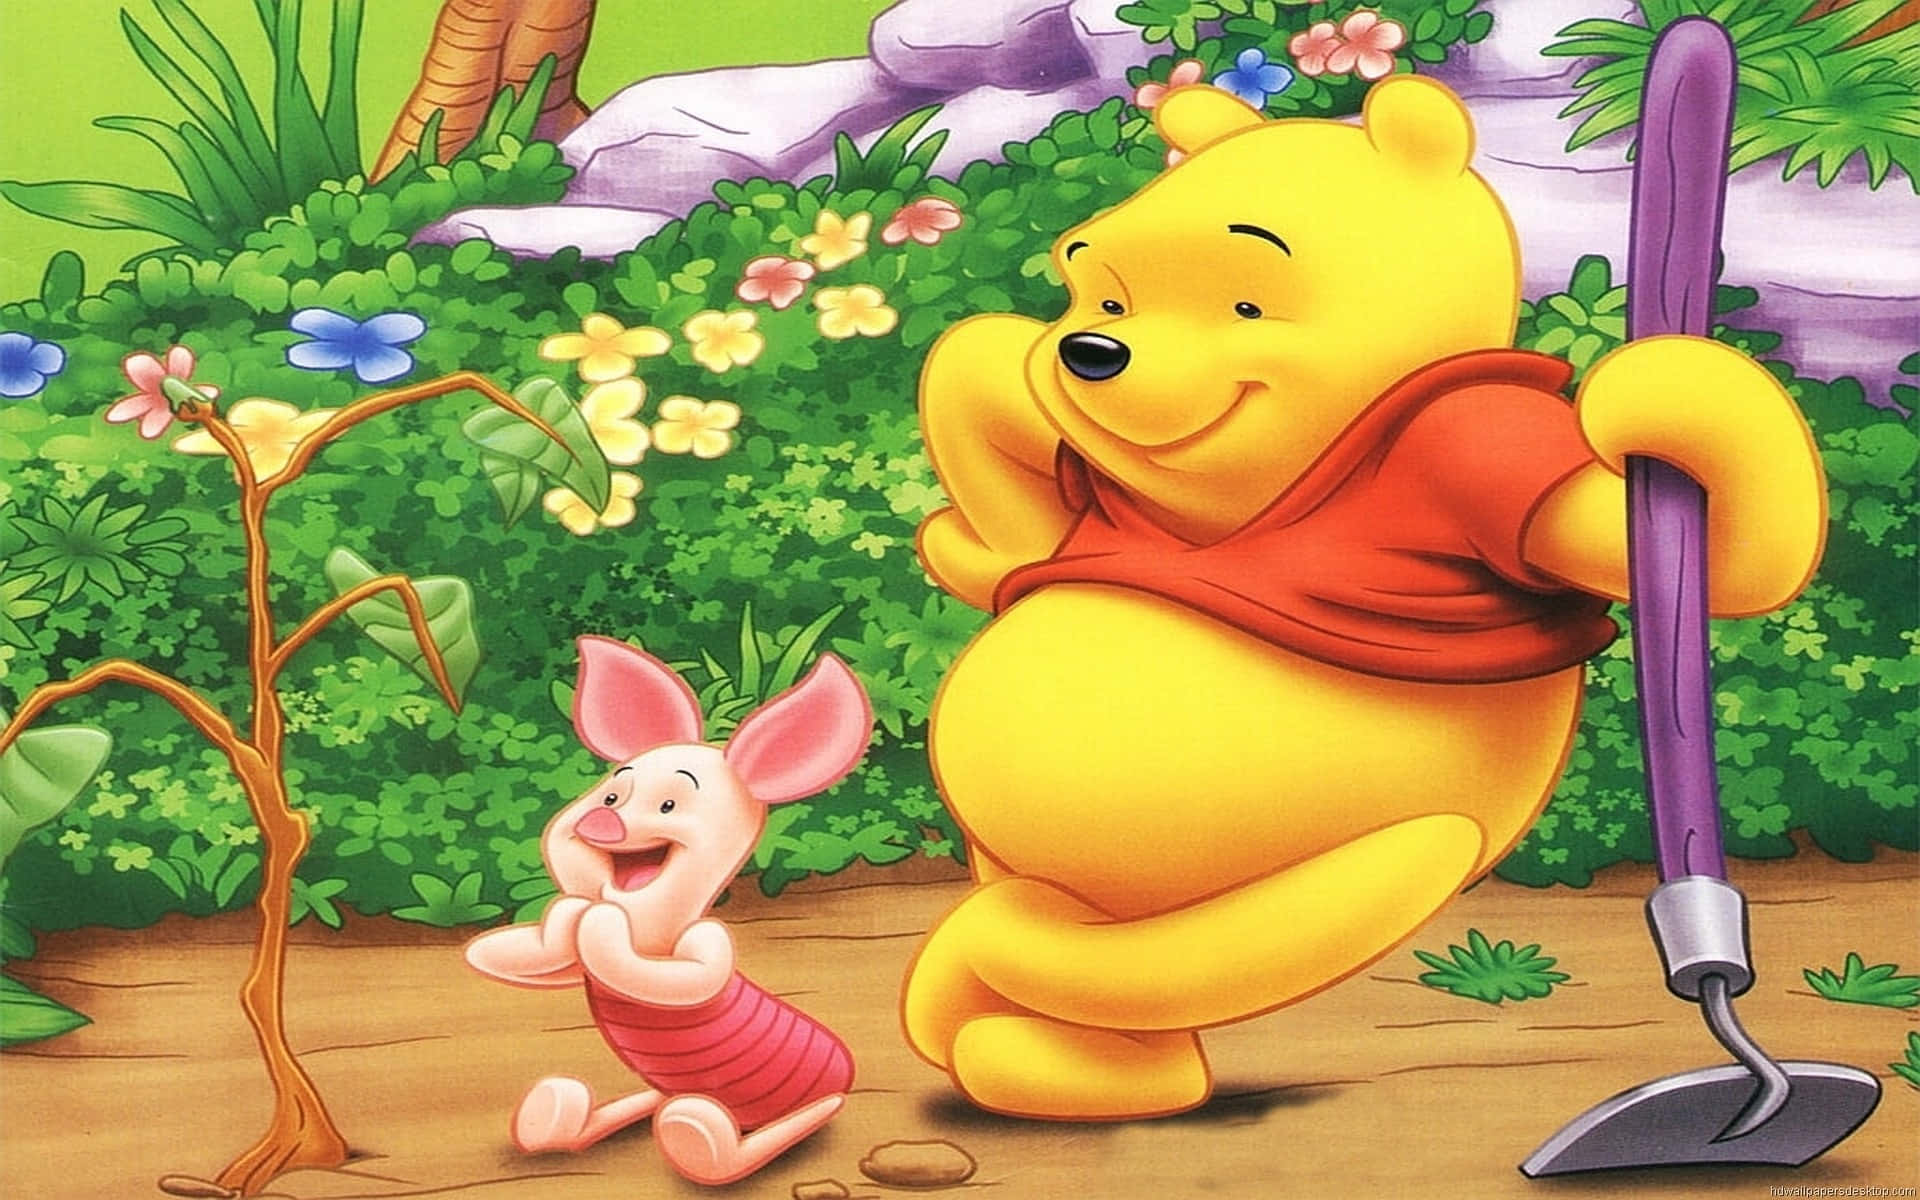 Enjoy A Slice Of Friendship With Winnie The Pooh